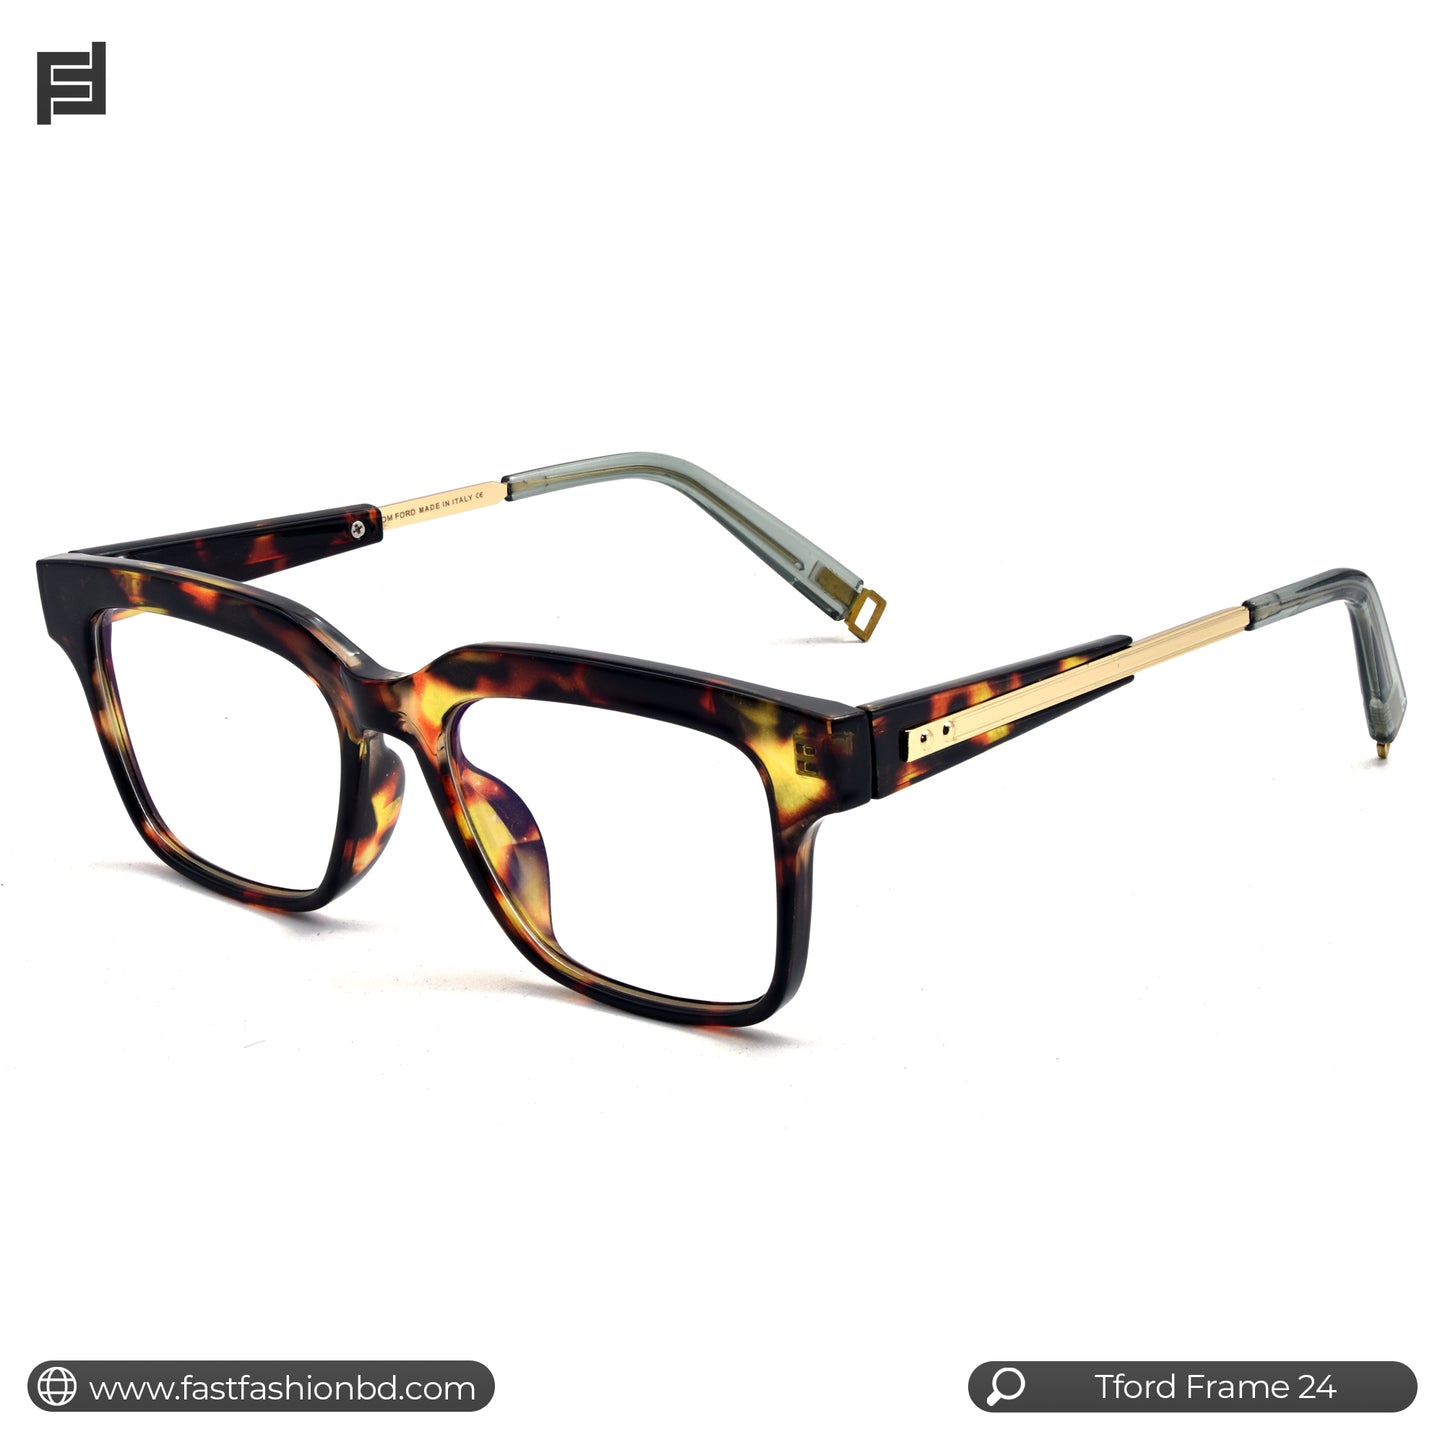 Trendy Stylish Optic Frame | TFord Frame 24 | Premium Quality